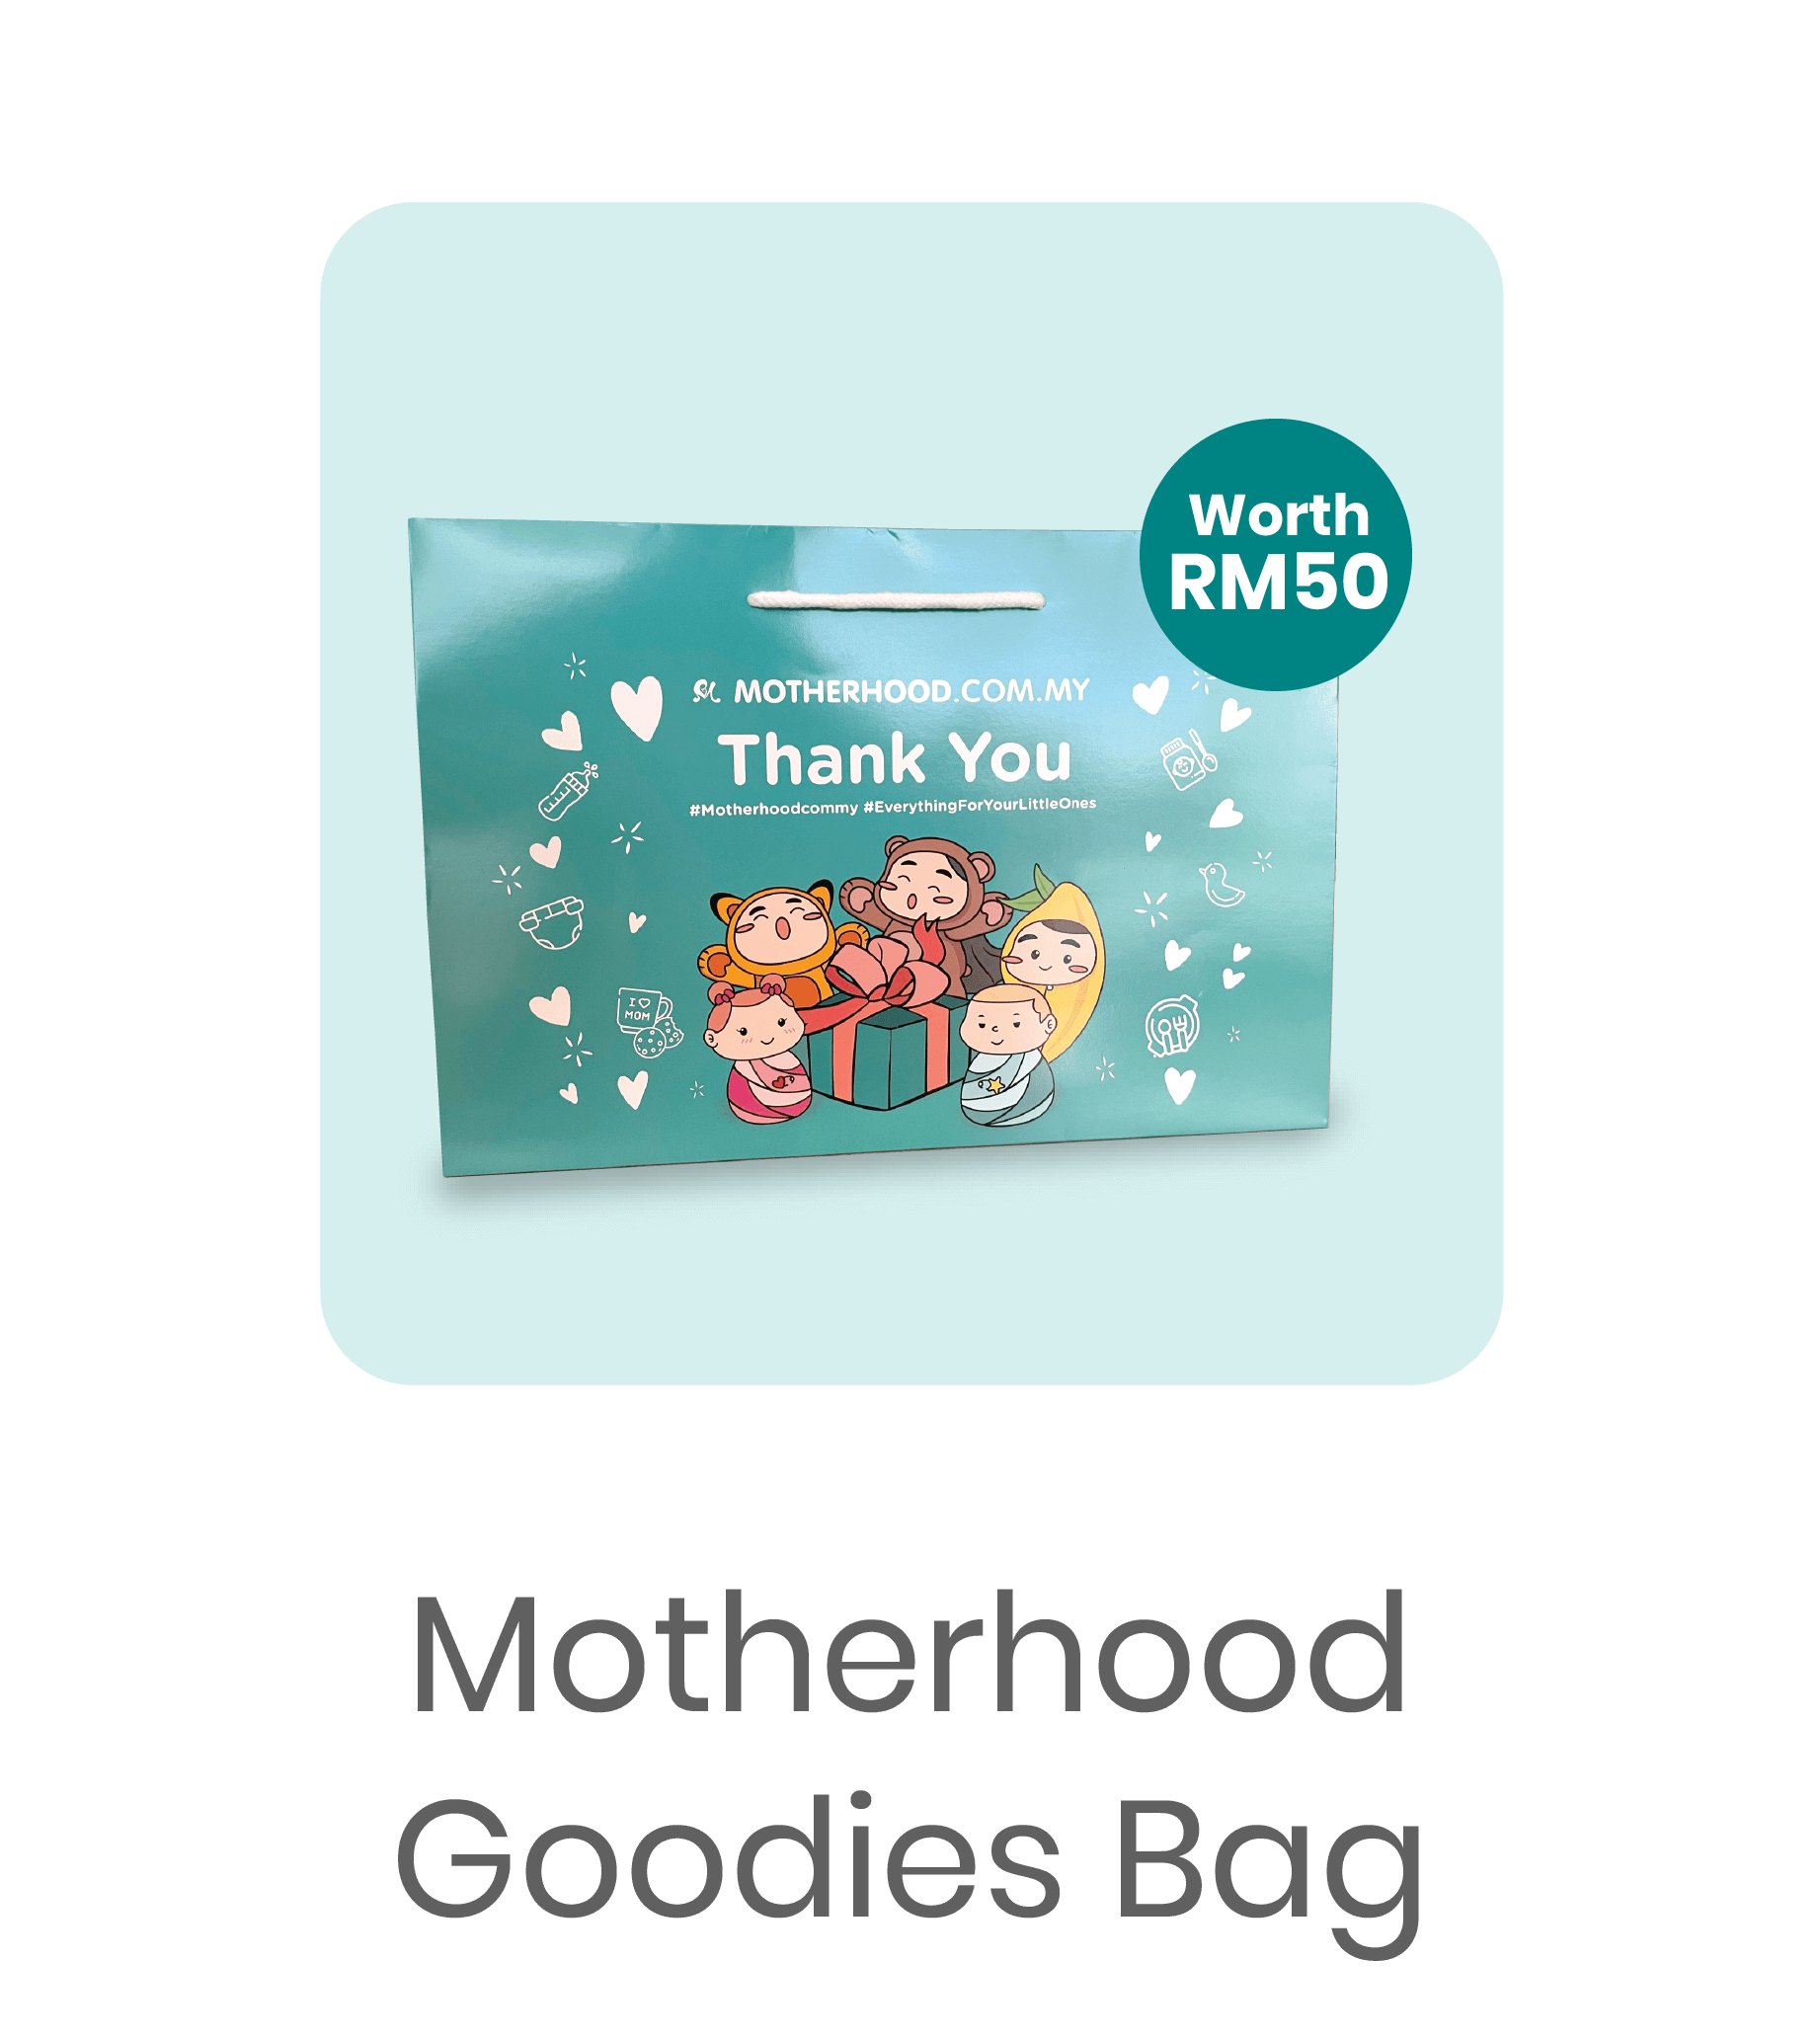 Motherhood Goodies Bag